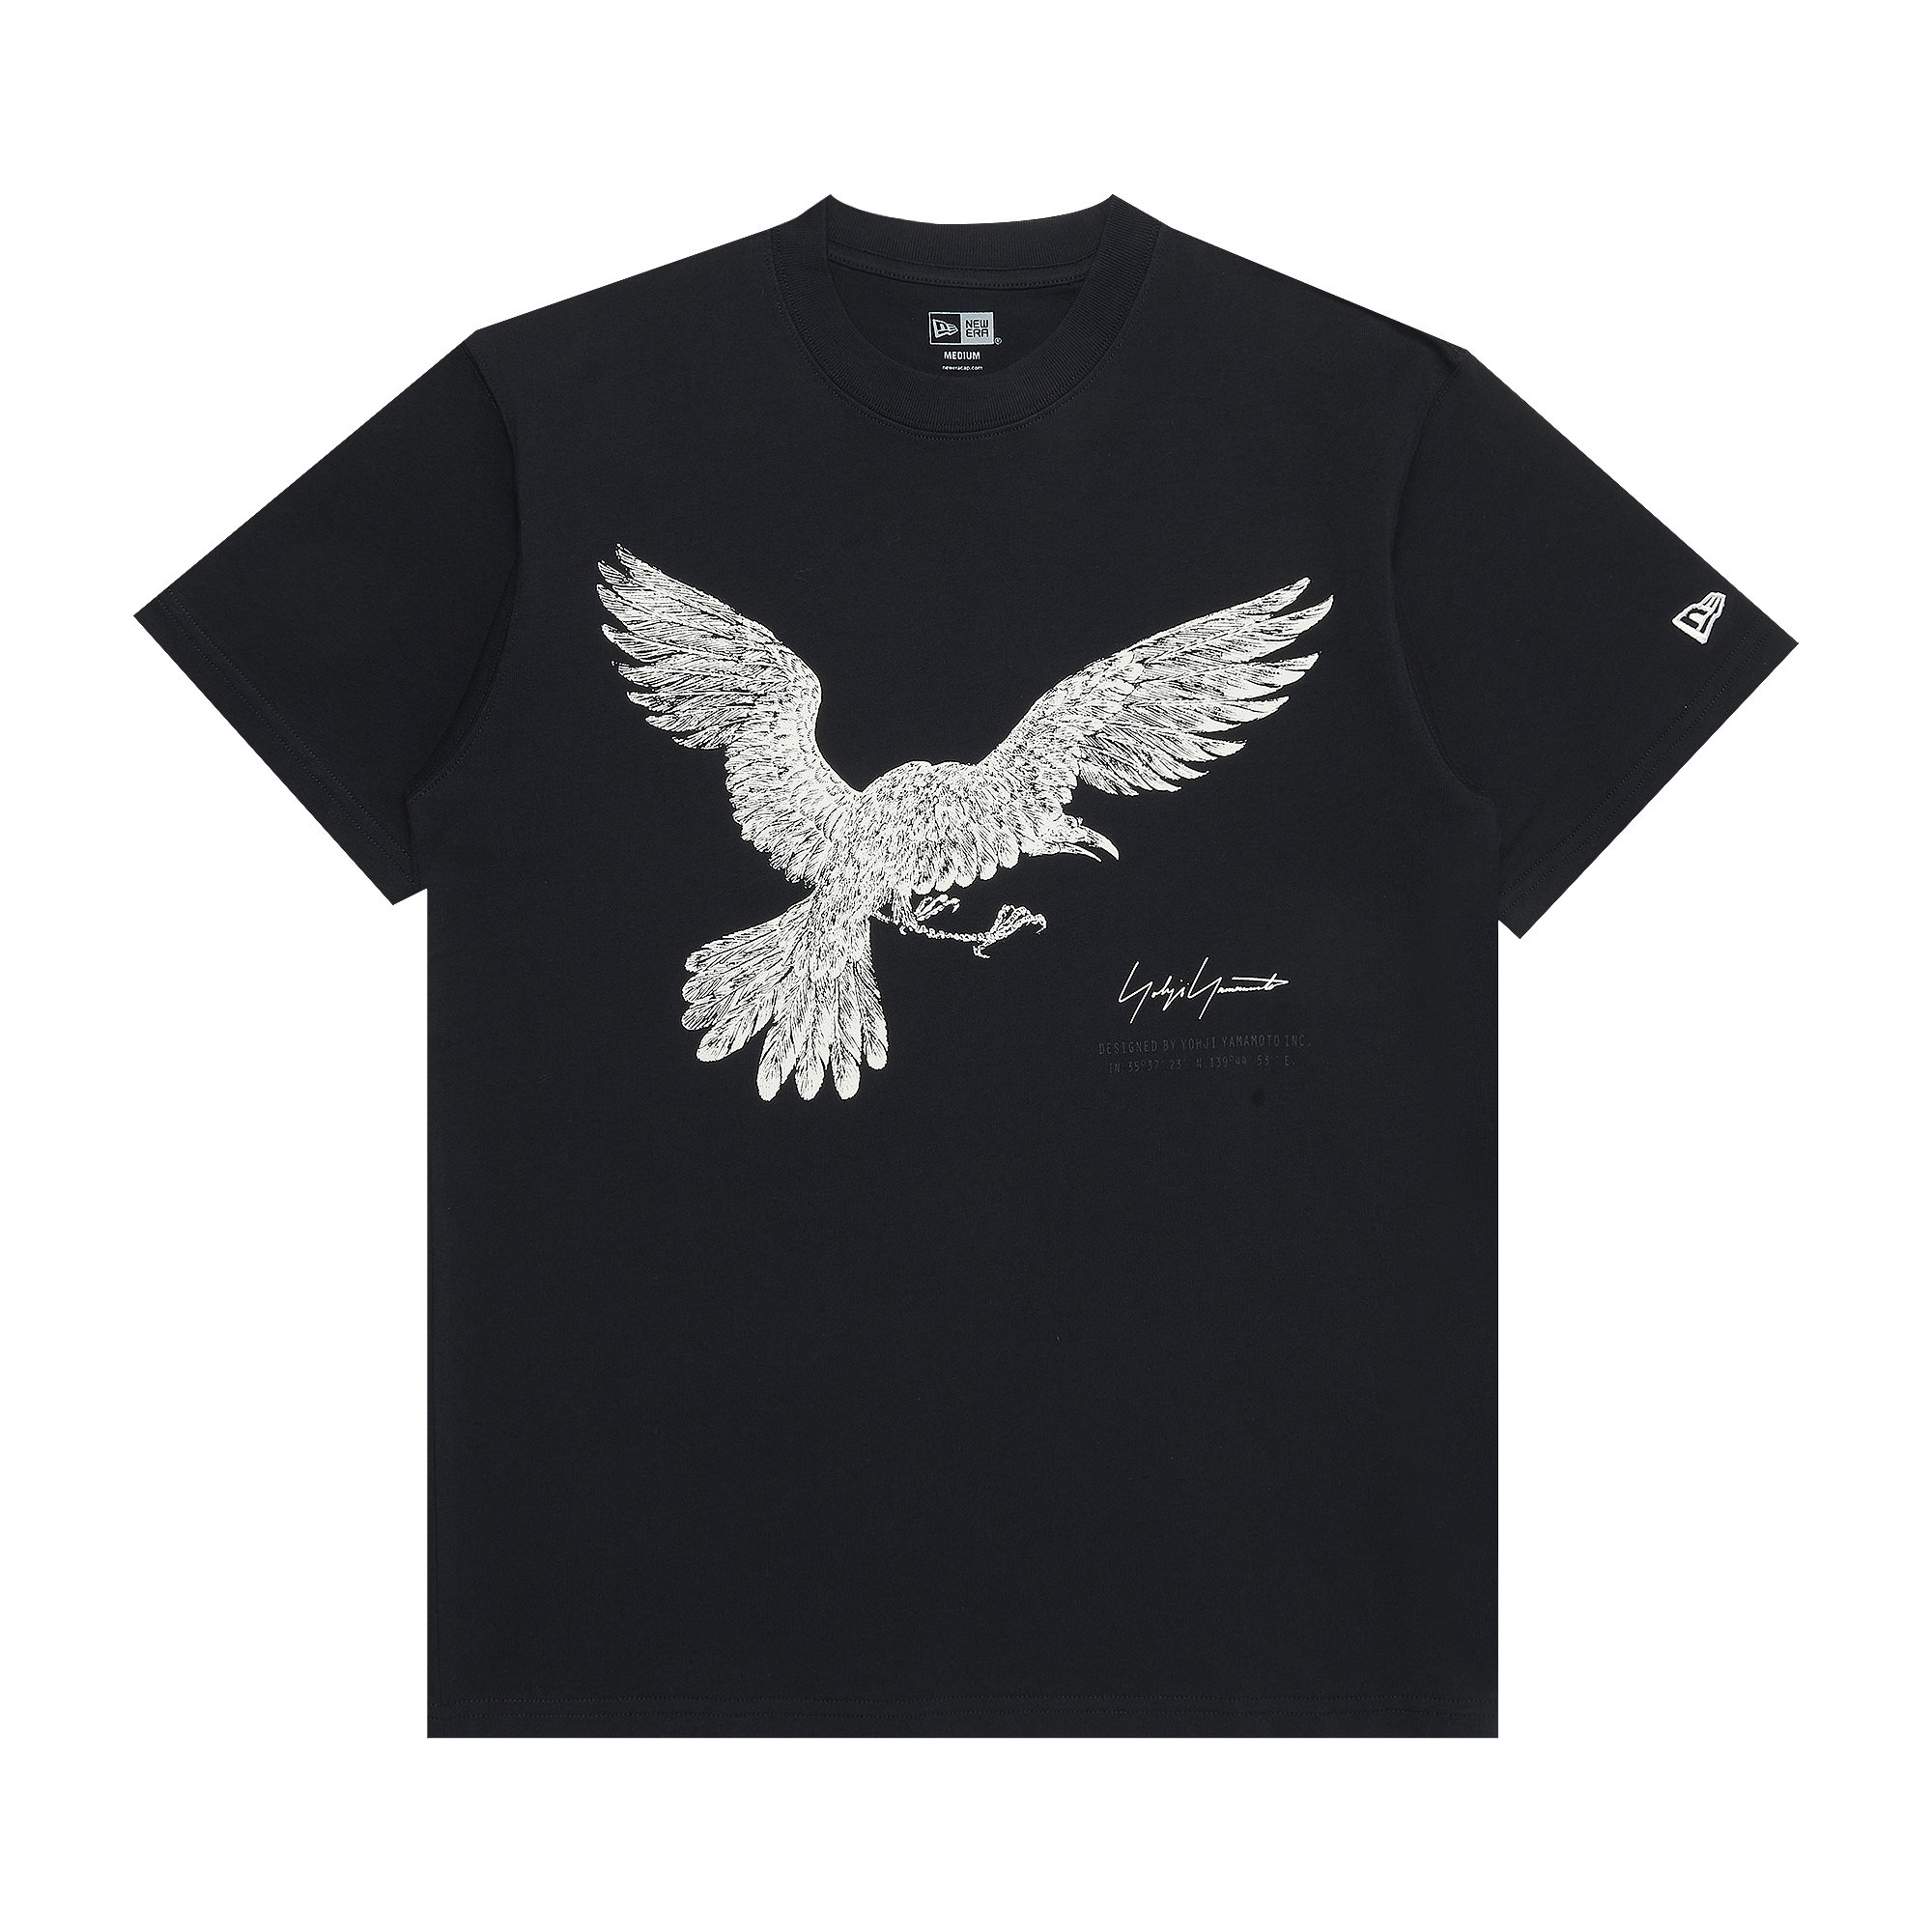 Yohji Yamamoto Pour Homme x New Era Printed T-Shirt 'Black' | GOAT